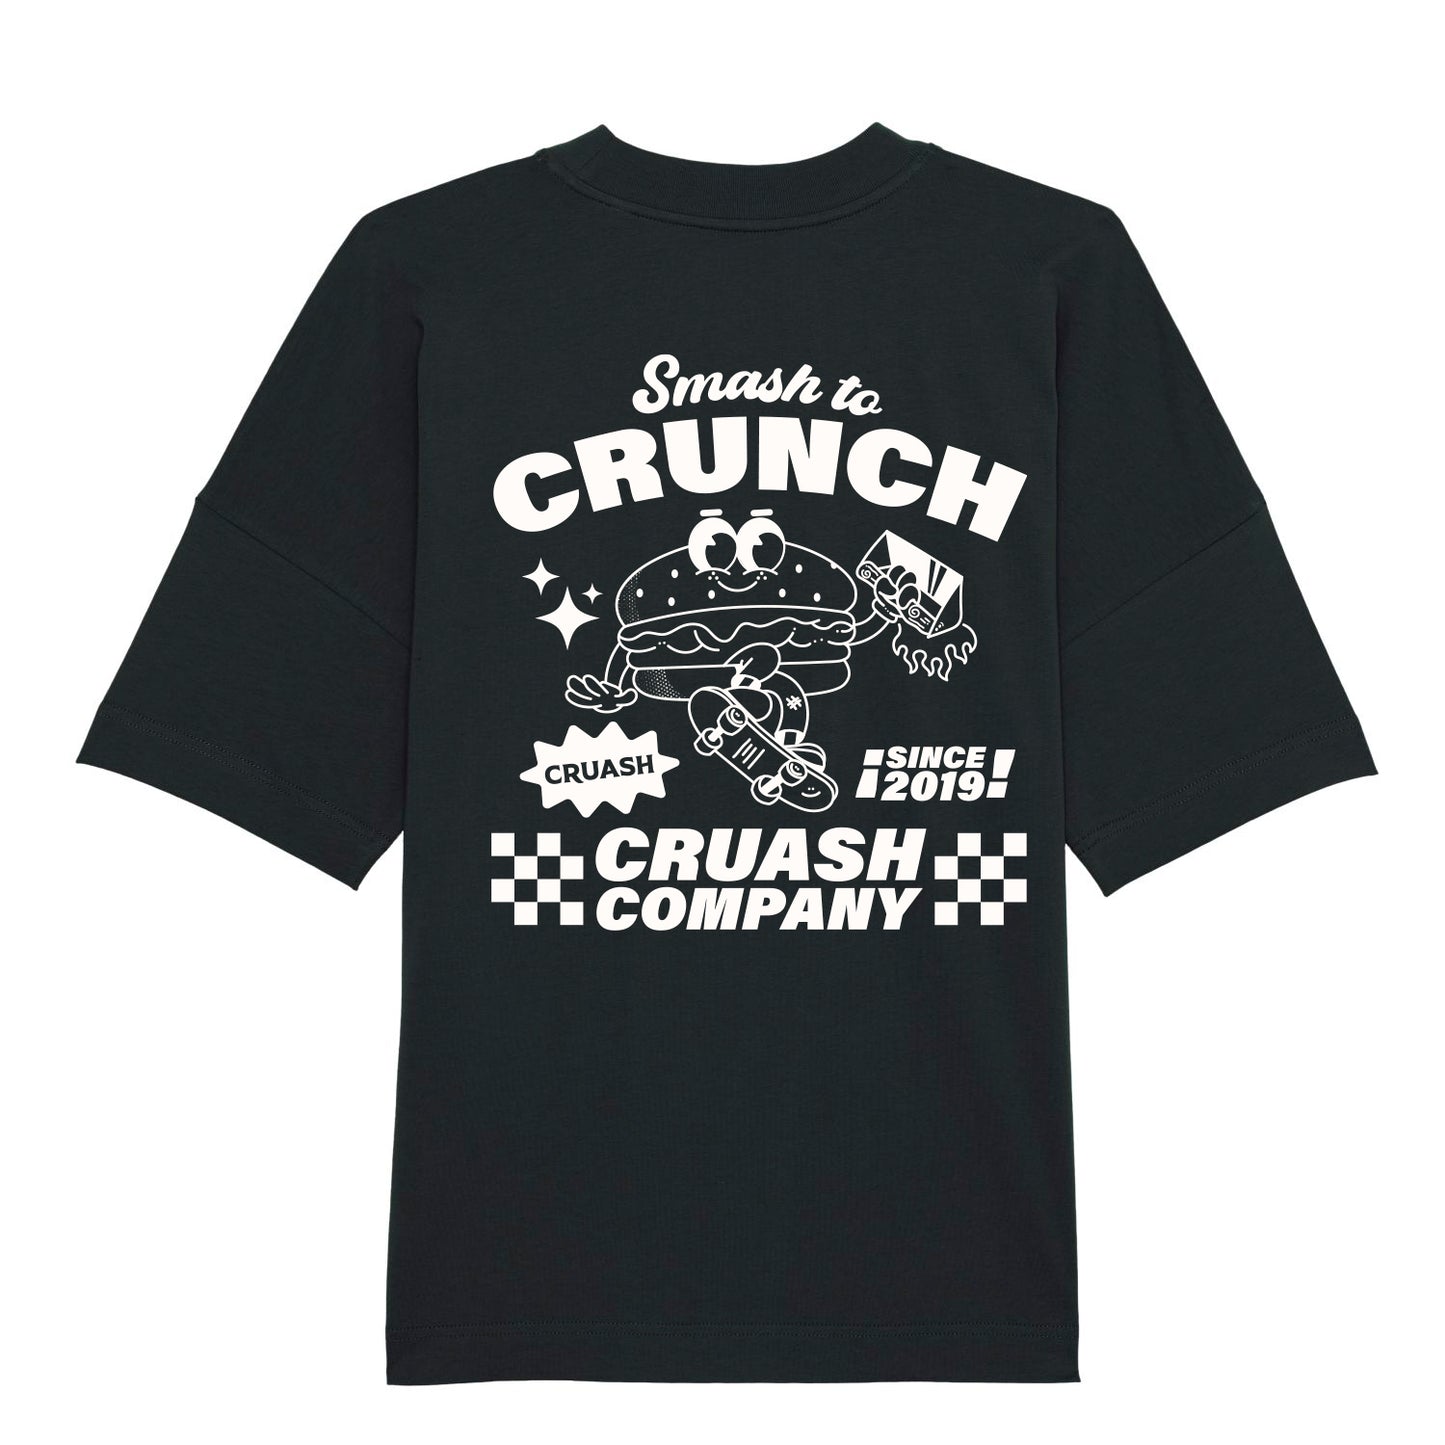 Oversized "Smash To Crunch" T-shirt